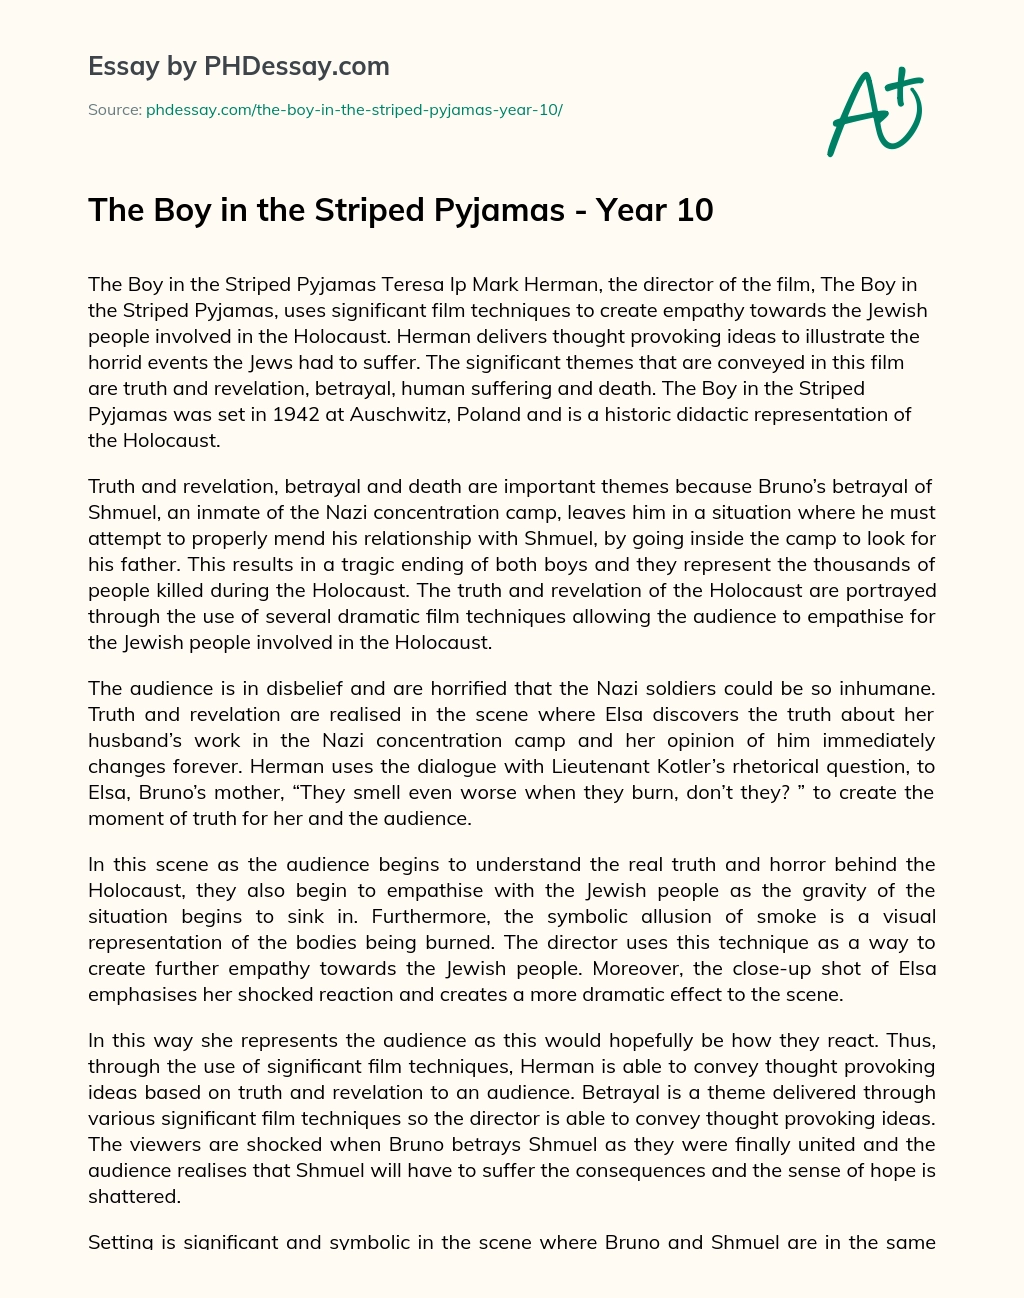 The Boy in the Striped Pyjamas – Year 10 essay